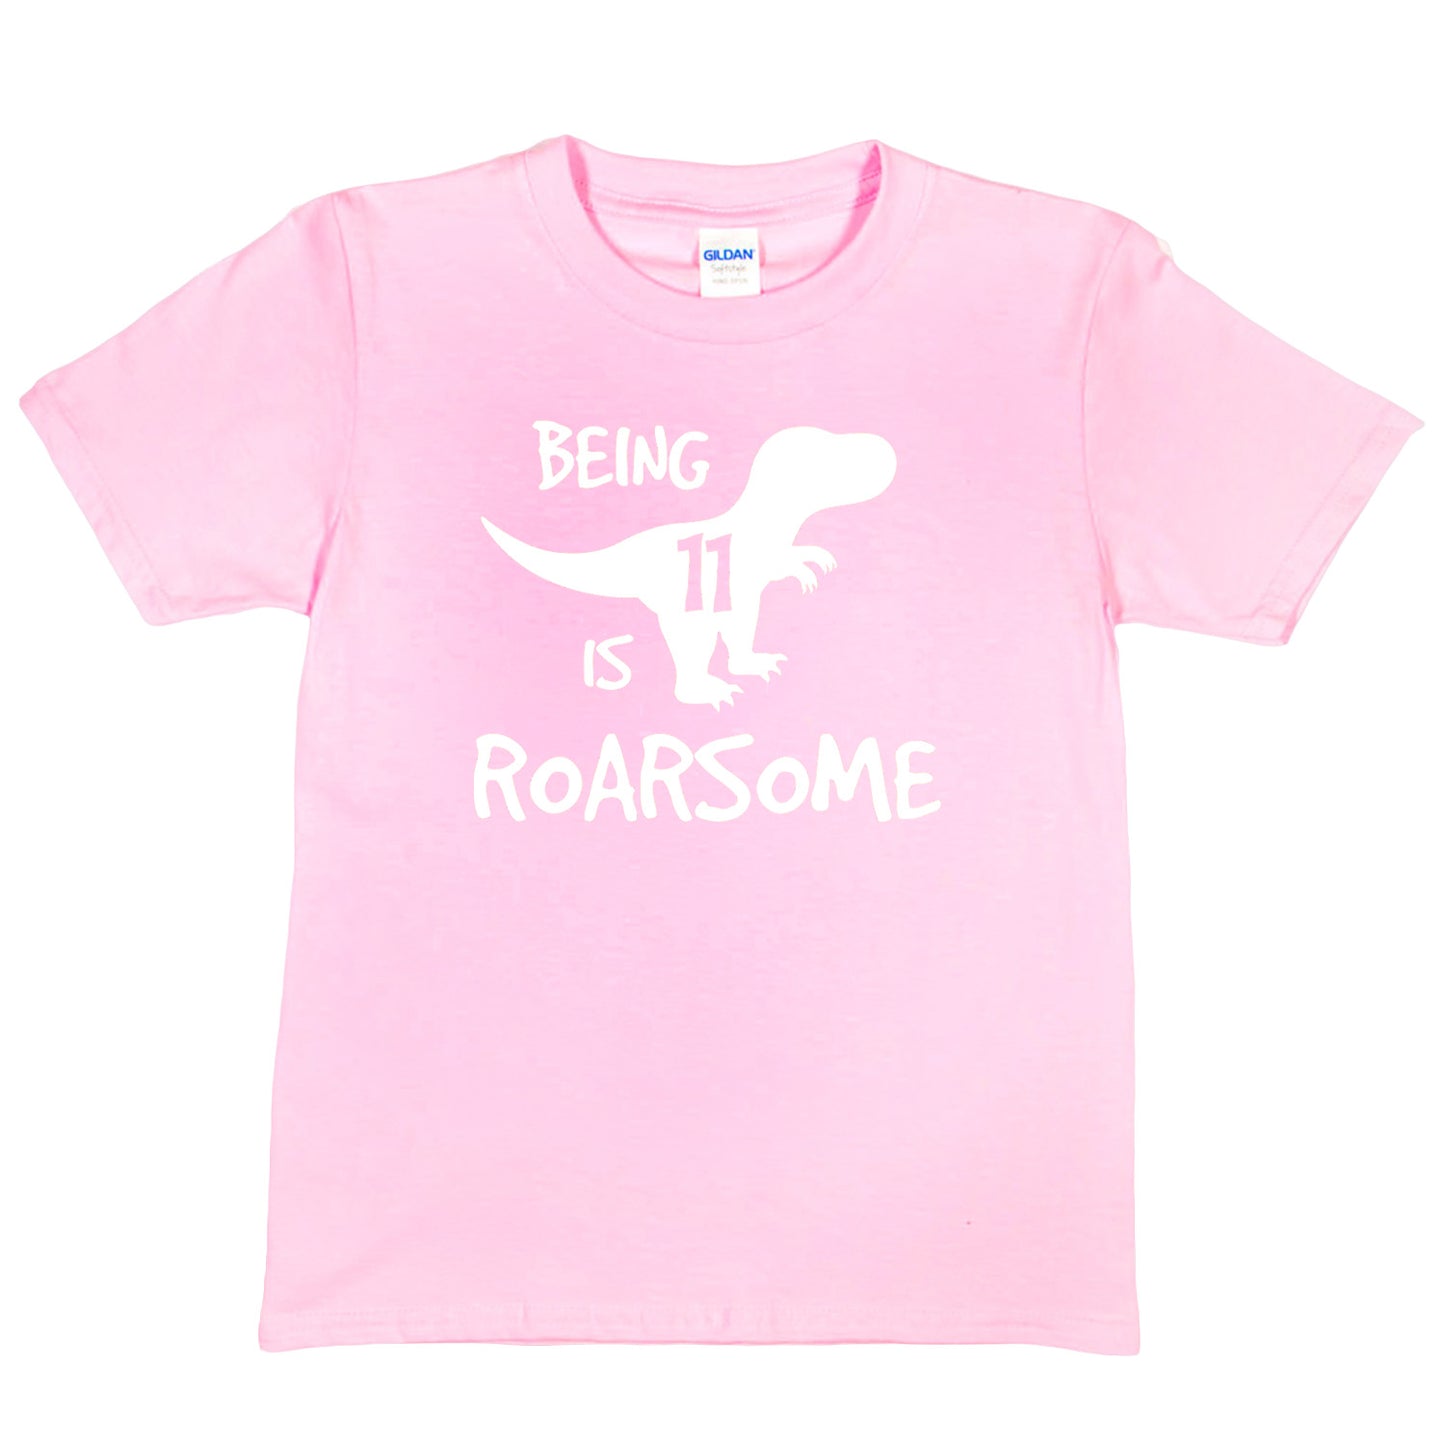 Kids T-shirt Dinosaur Roarsome Age 11 Happy 11th Birthday T-Shirt